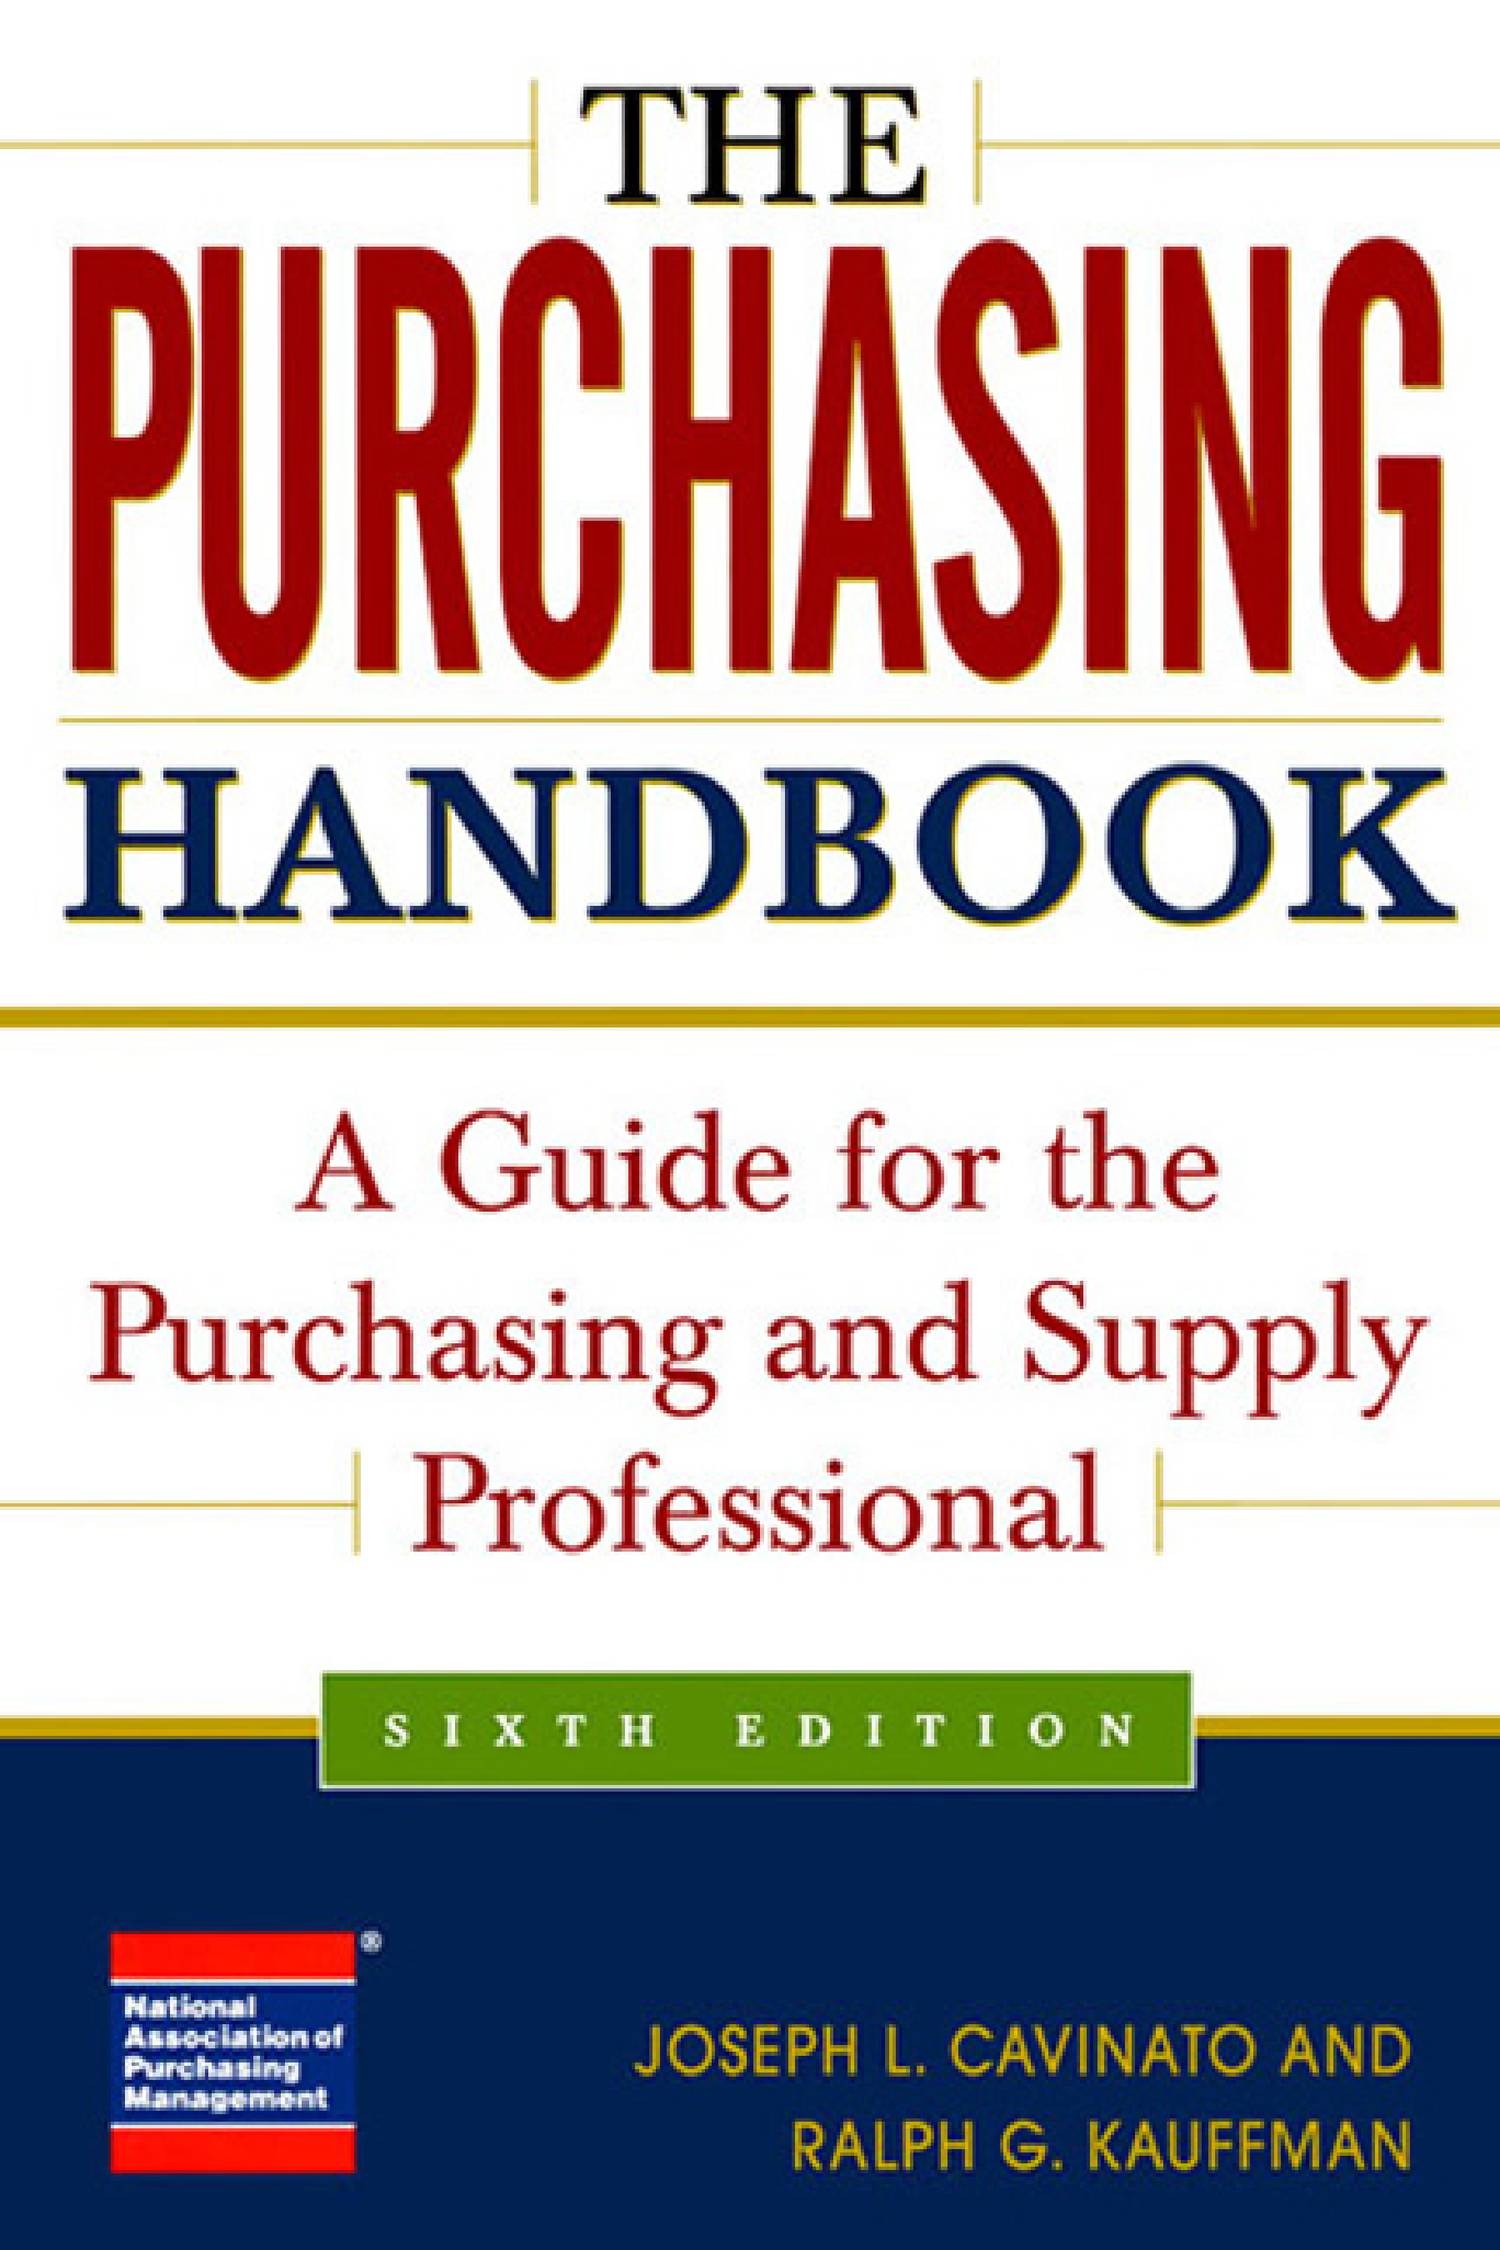 purchasing handbook pdf DocDroid